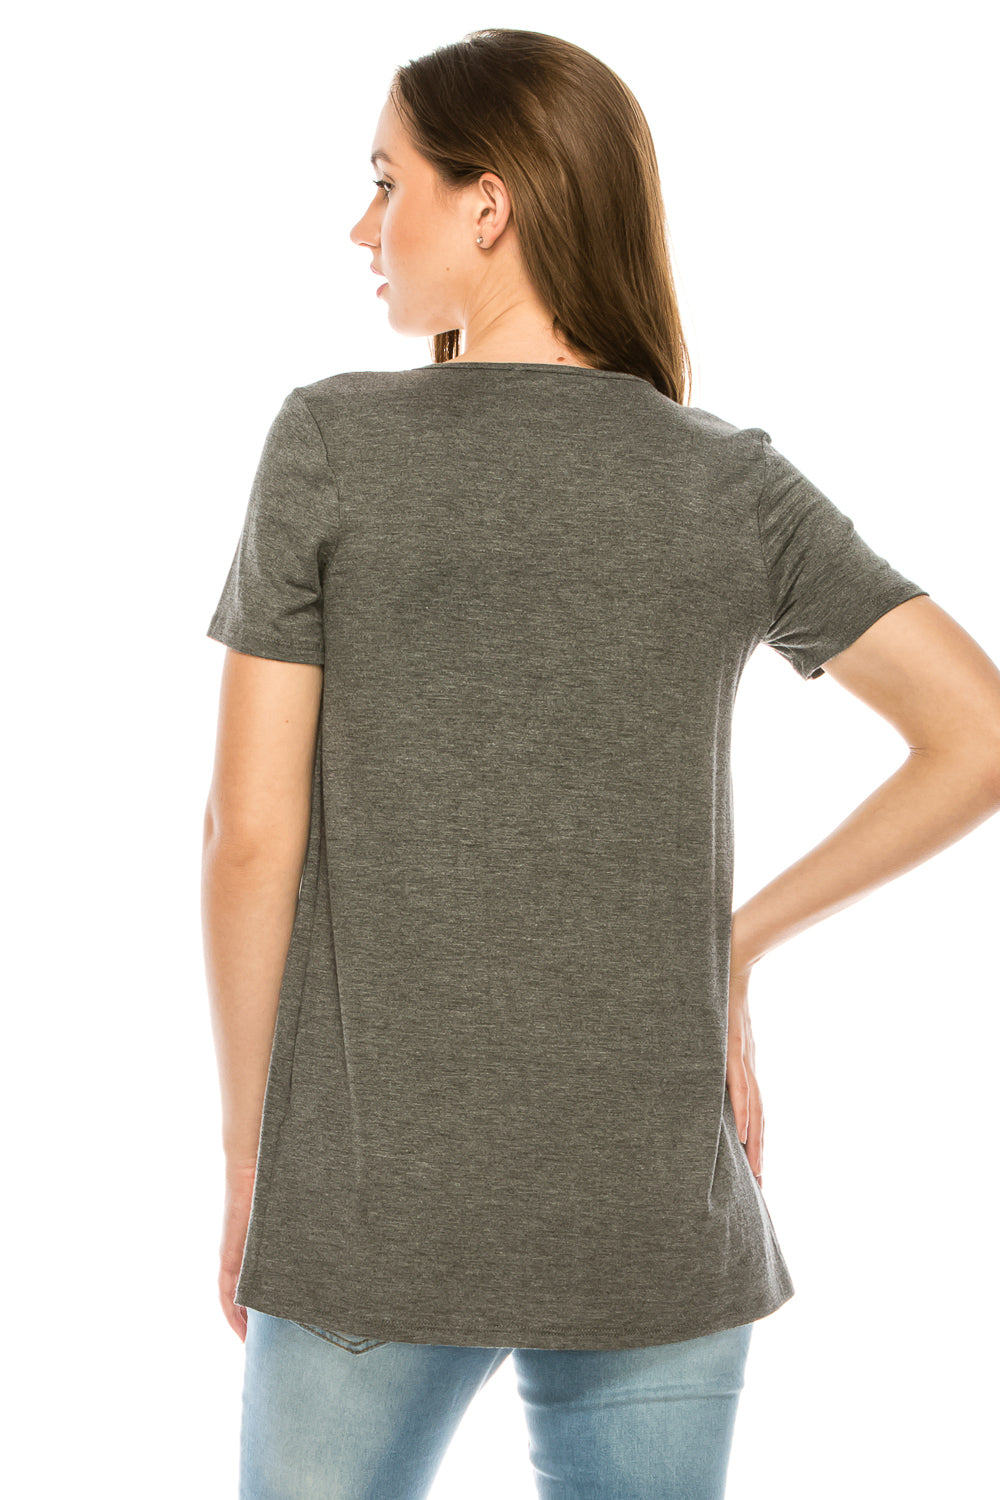 Made in USA Women's Round Neck Short Sleeve TOP - annva-usa